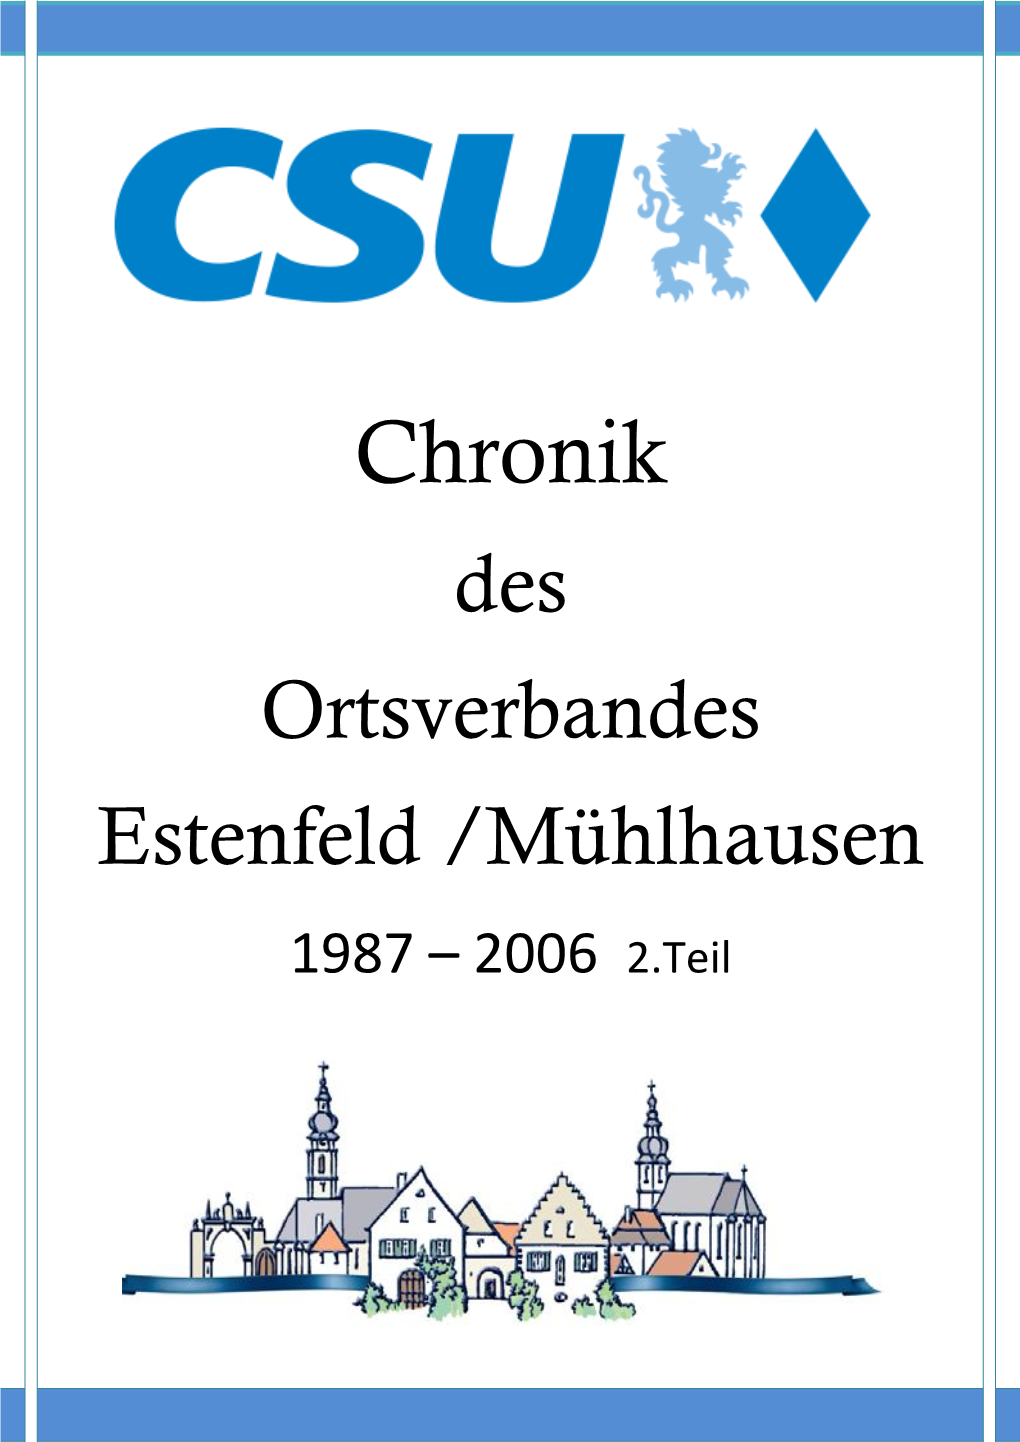 CSU Chronik Ortsverband Estenfeld/Mühlhausen 1987 – 2006 2.Teil 1